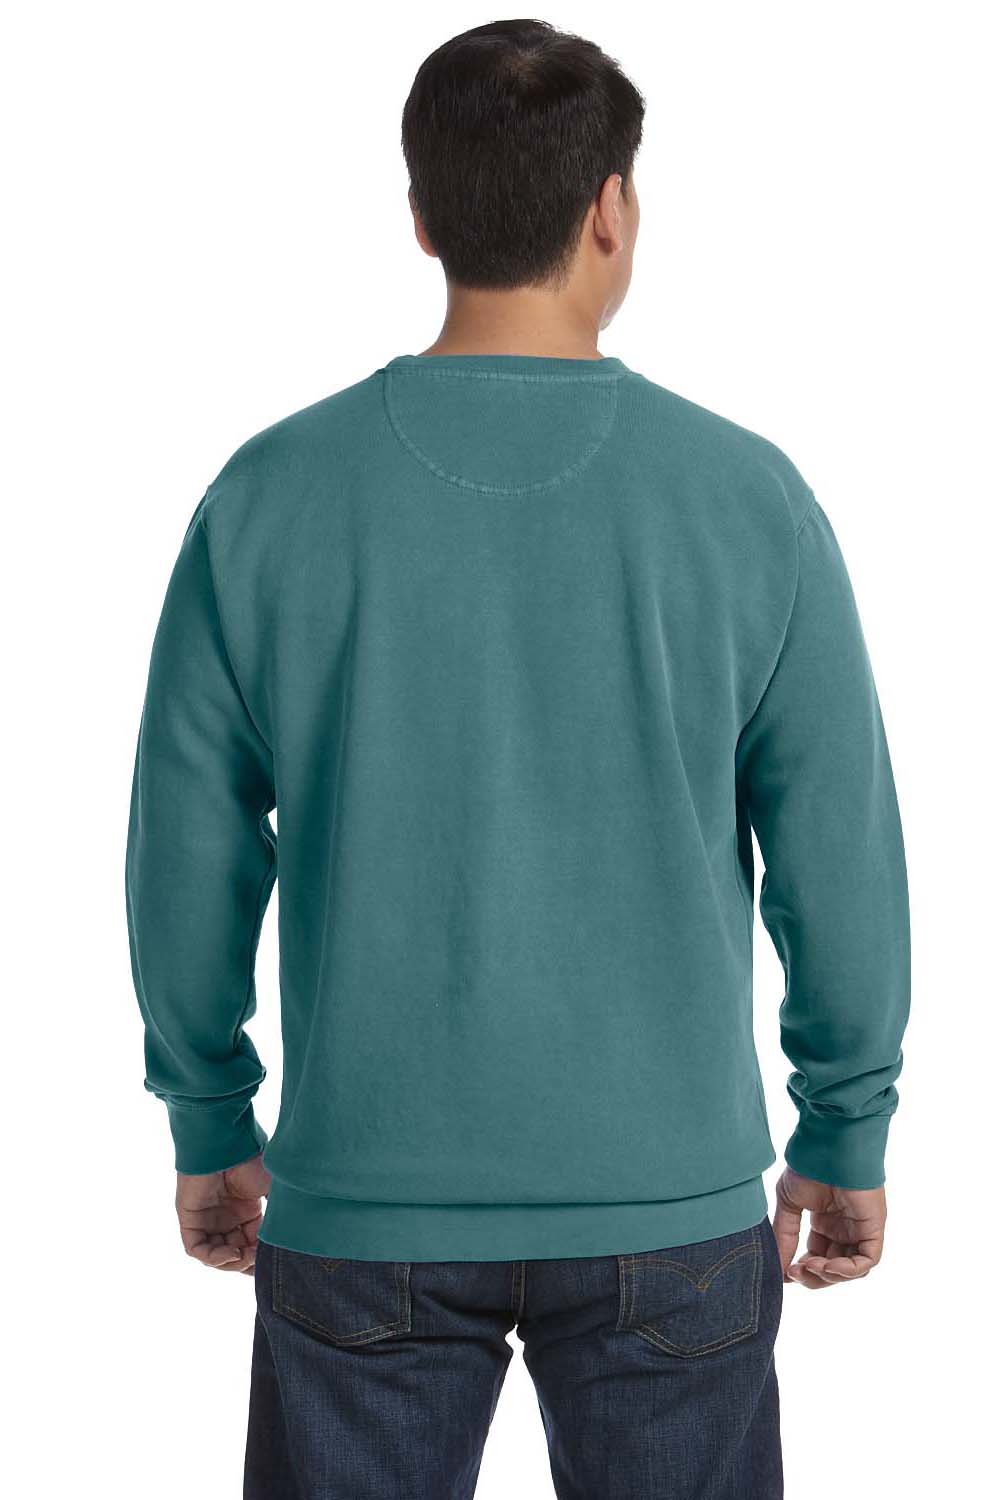 Comfort Colors 1566 Mens Crewneck Sweatshirt Blue Spruce Back